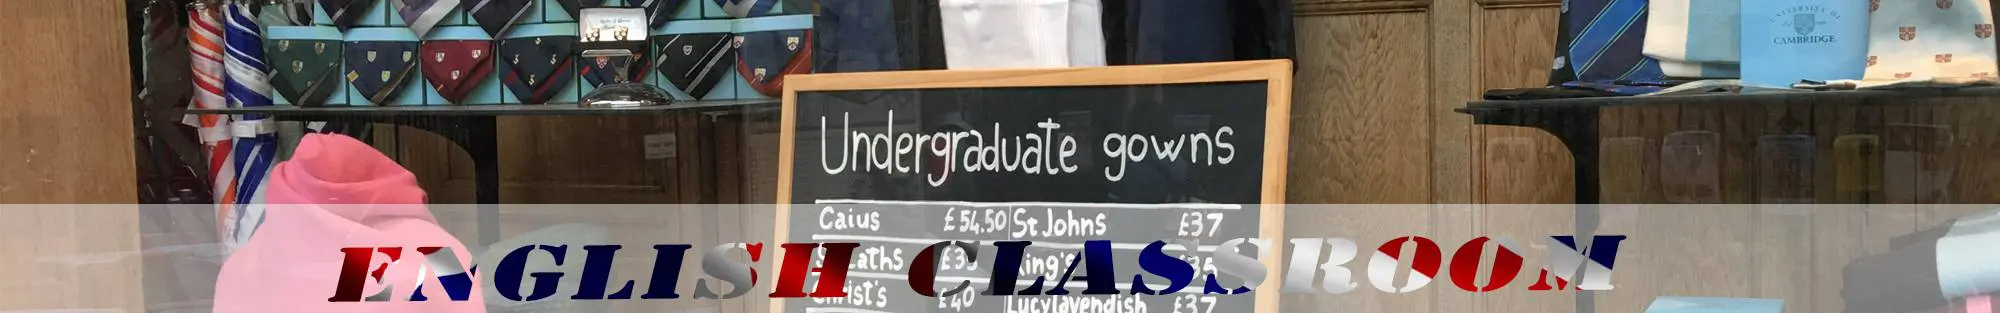 undergraduate gowns cambridge header english classroom